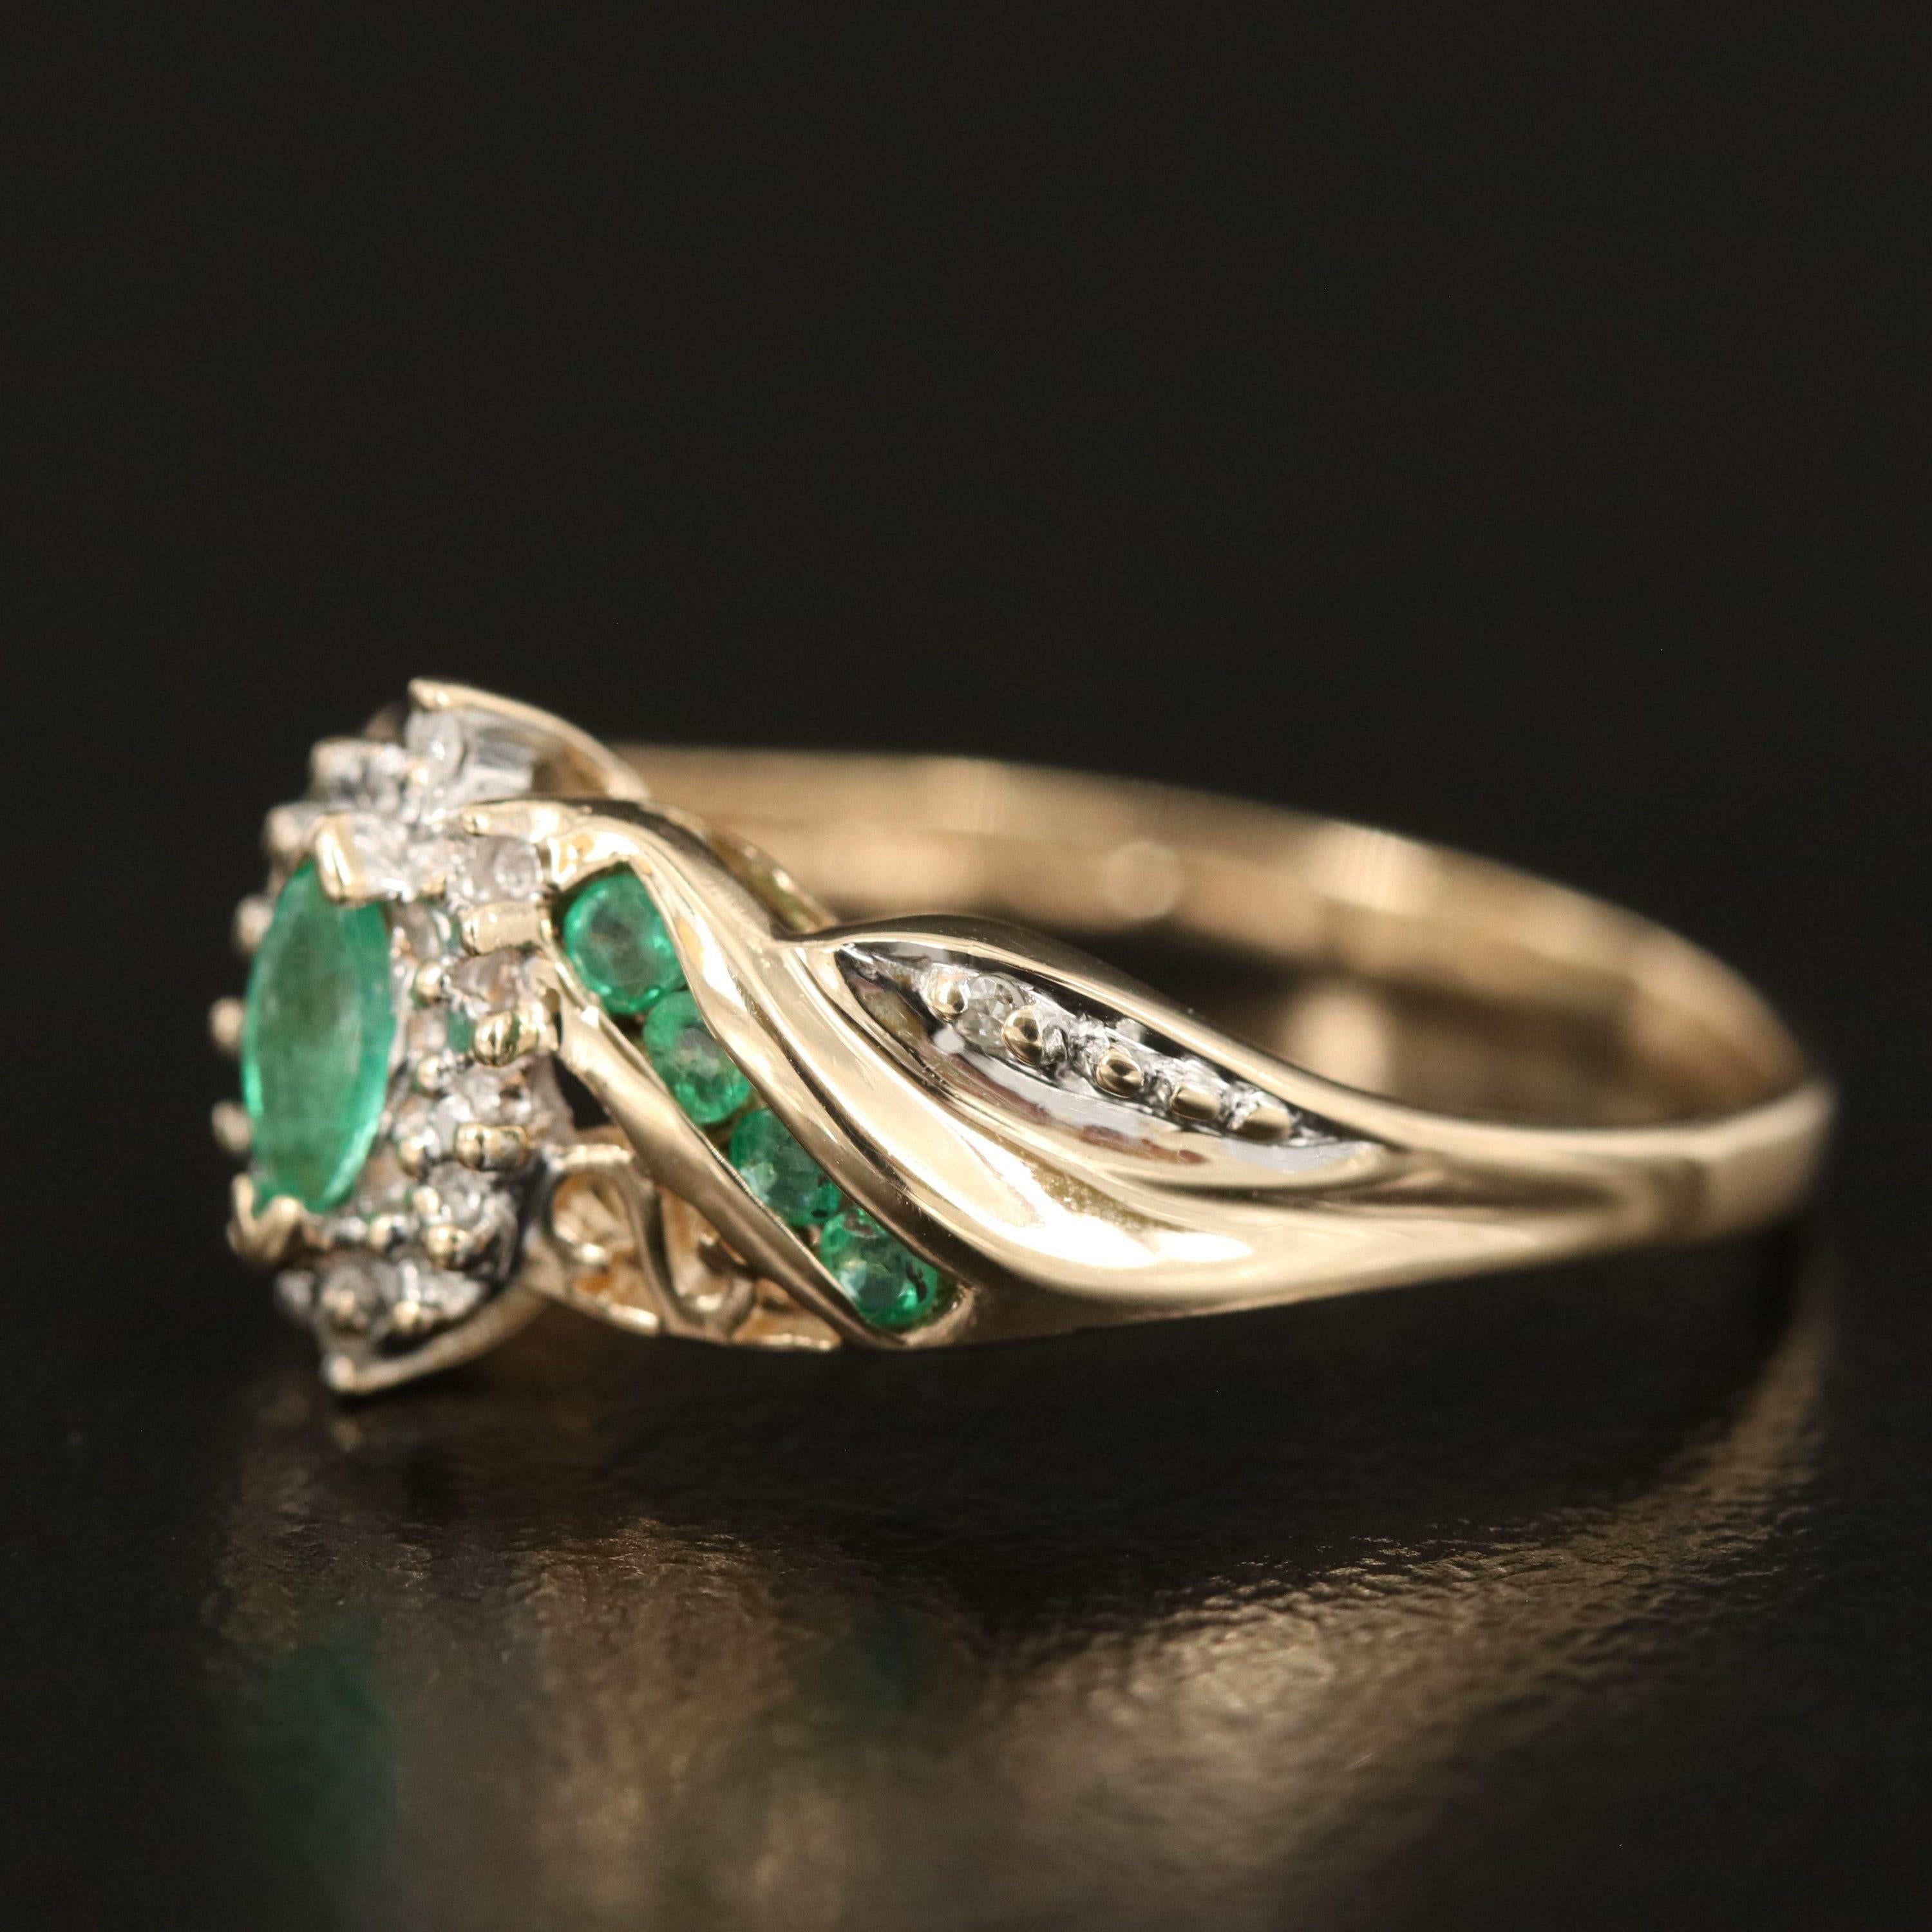 For Sale:  1.5 Carat Marquise Cut Emerald Diamond Bridal Ring Diamond Emerald Cocktail Ring 3